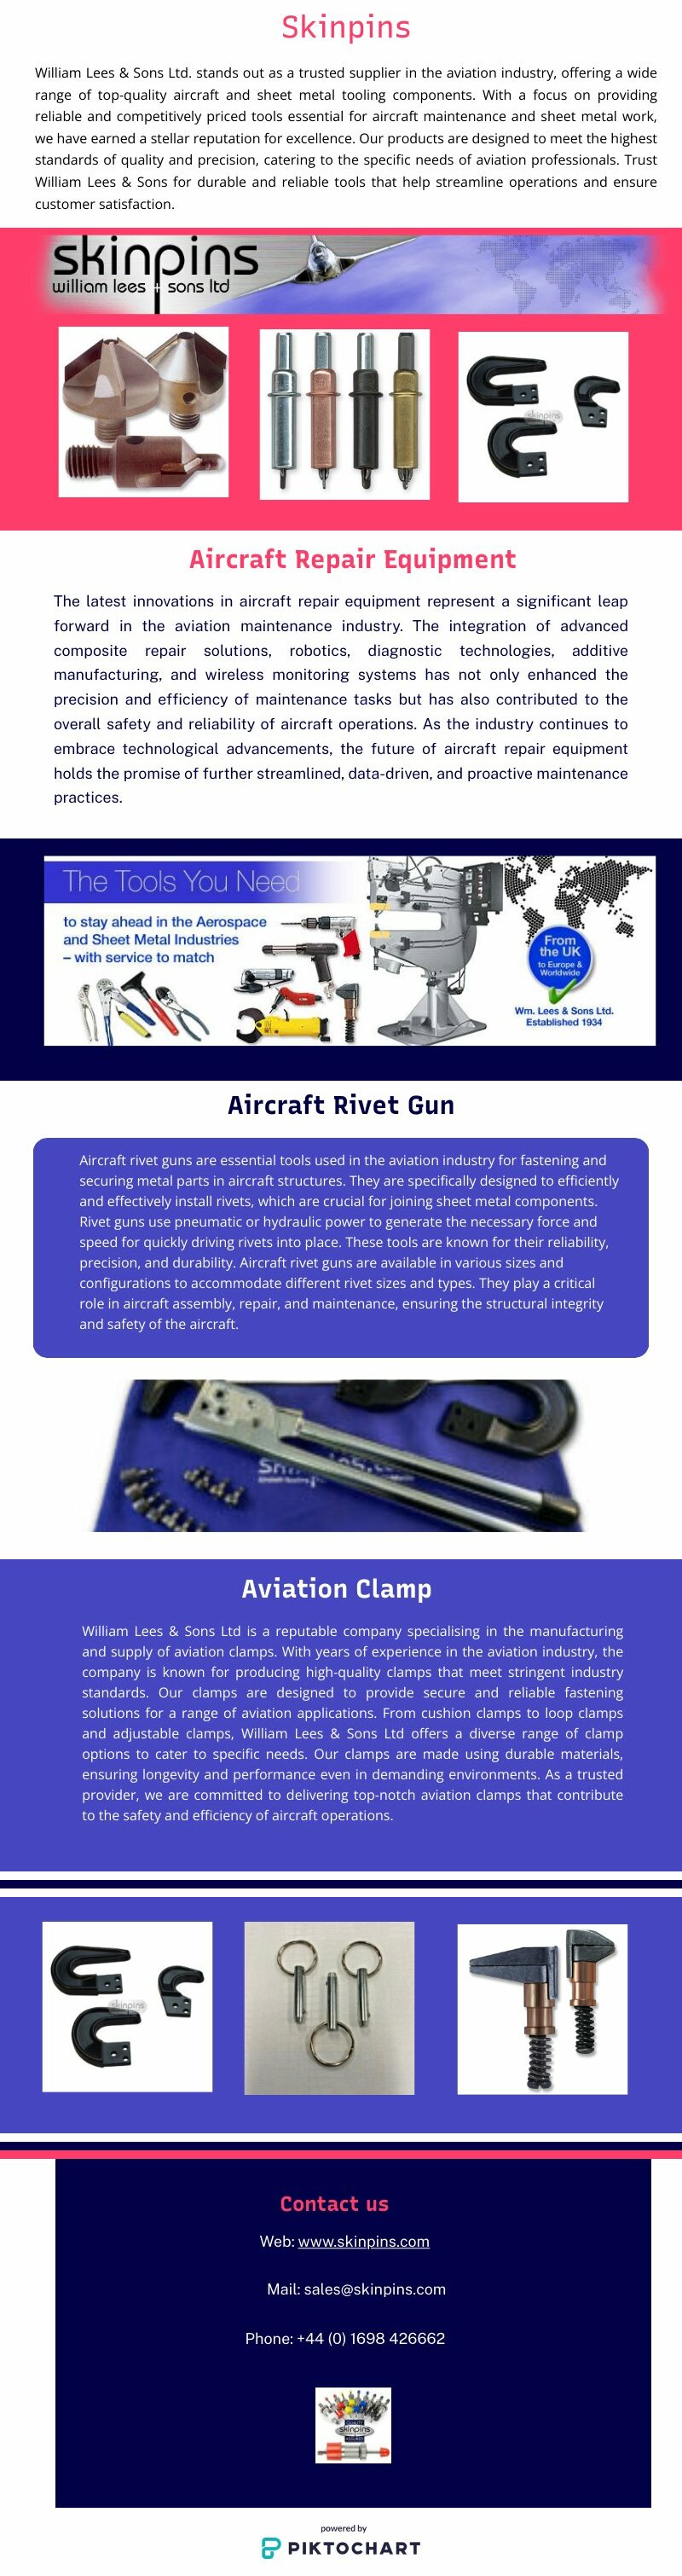 The Latest Innovations in Aircraft Repair Equipment | Piktochart Visual Editor